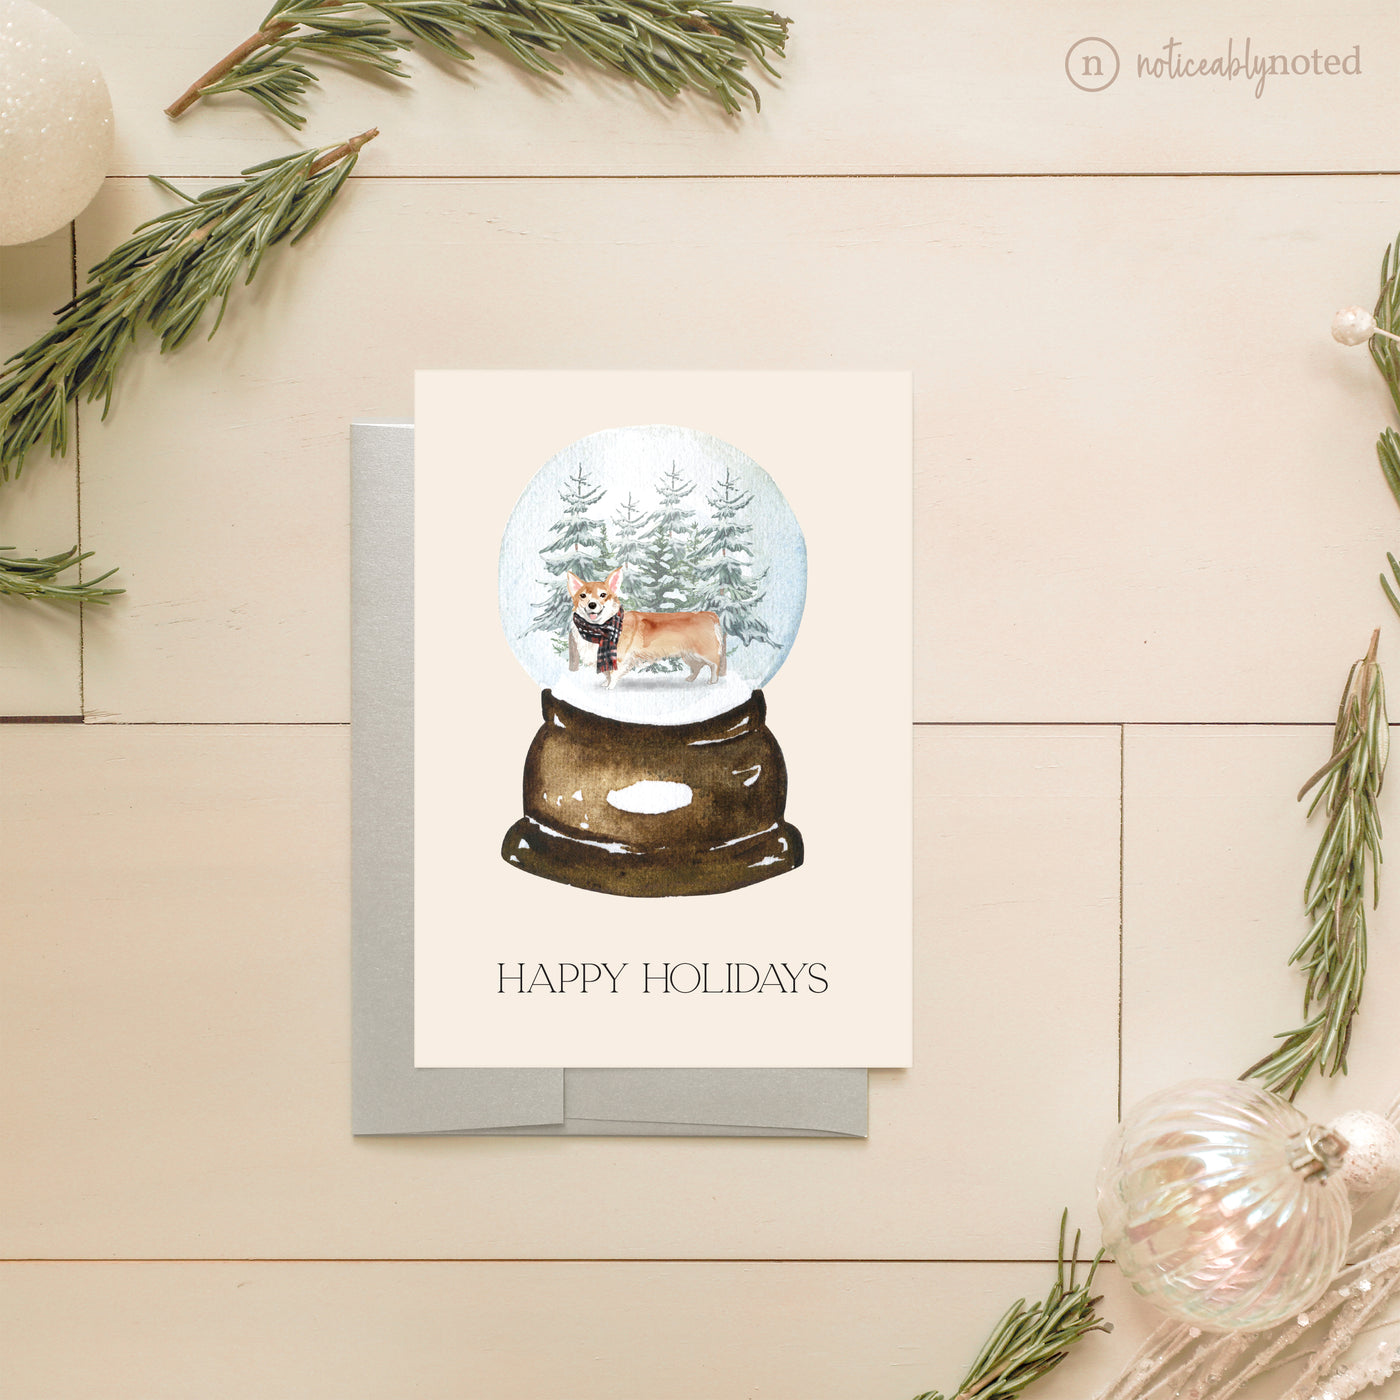 Corgi Dog Holiday Greeting Cards | Noticeably Noted